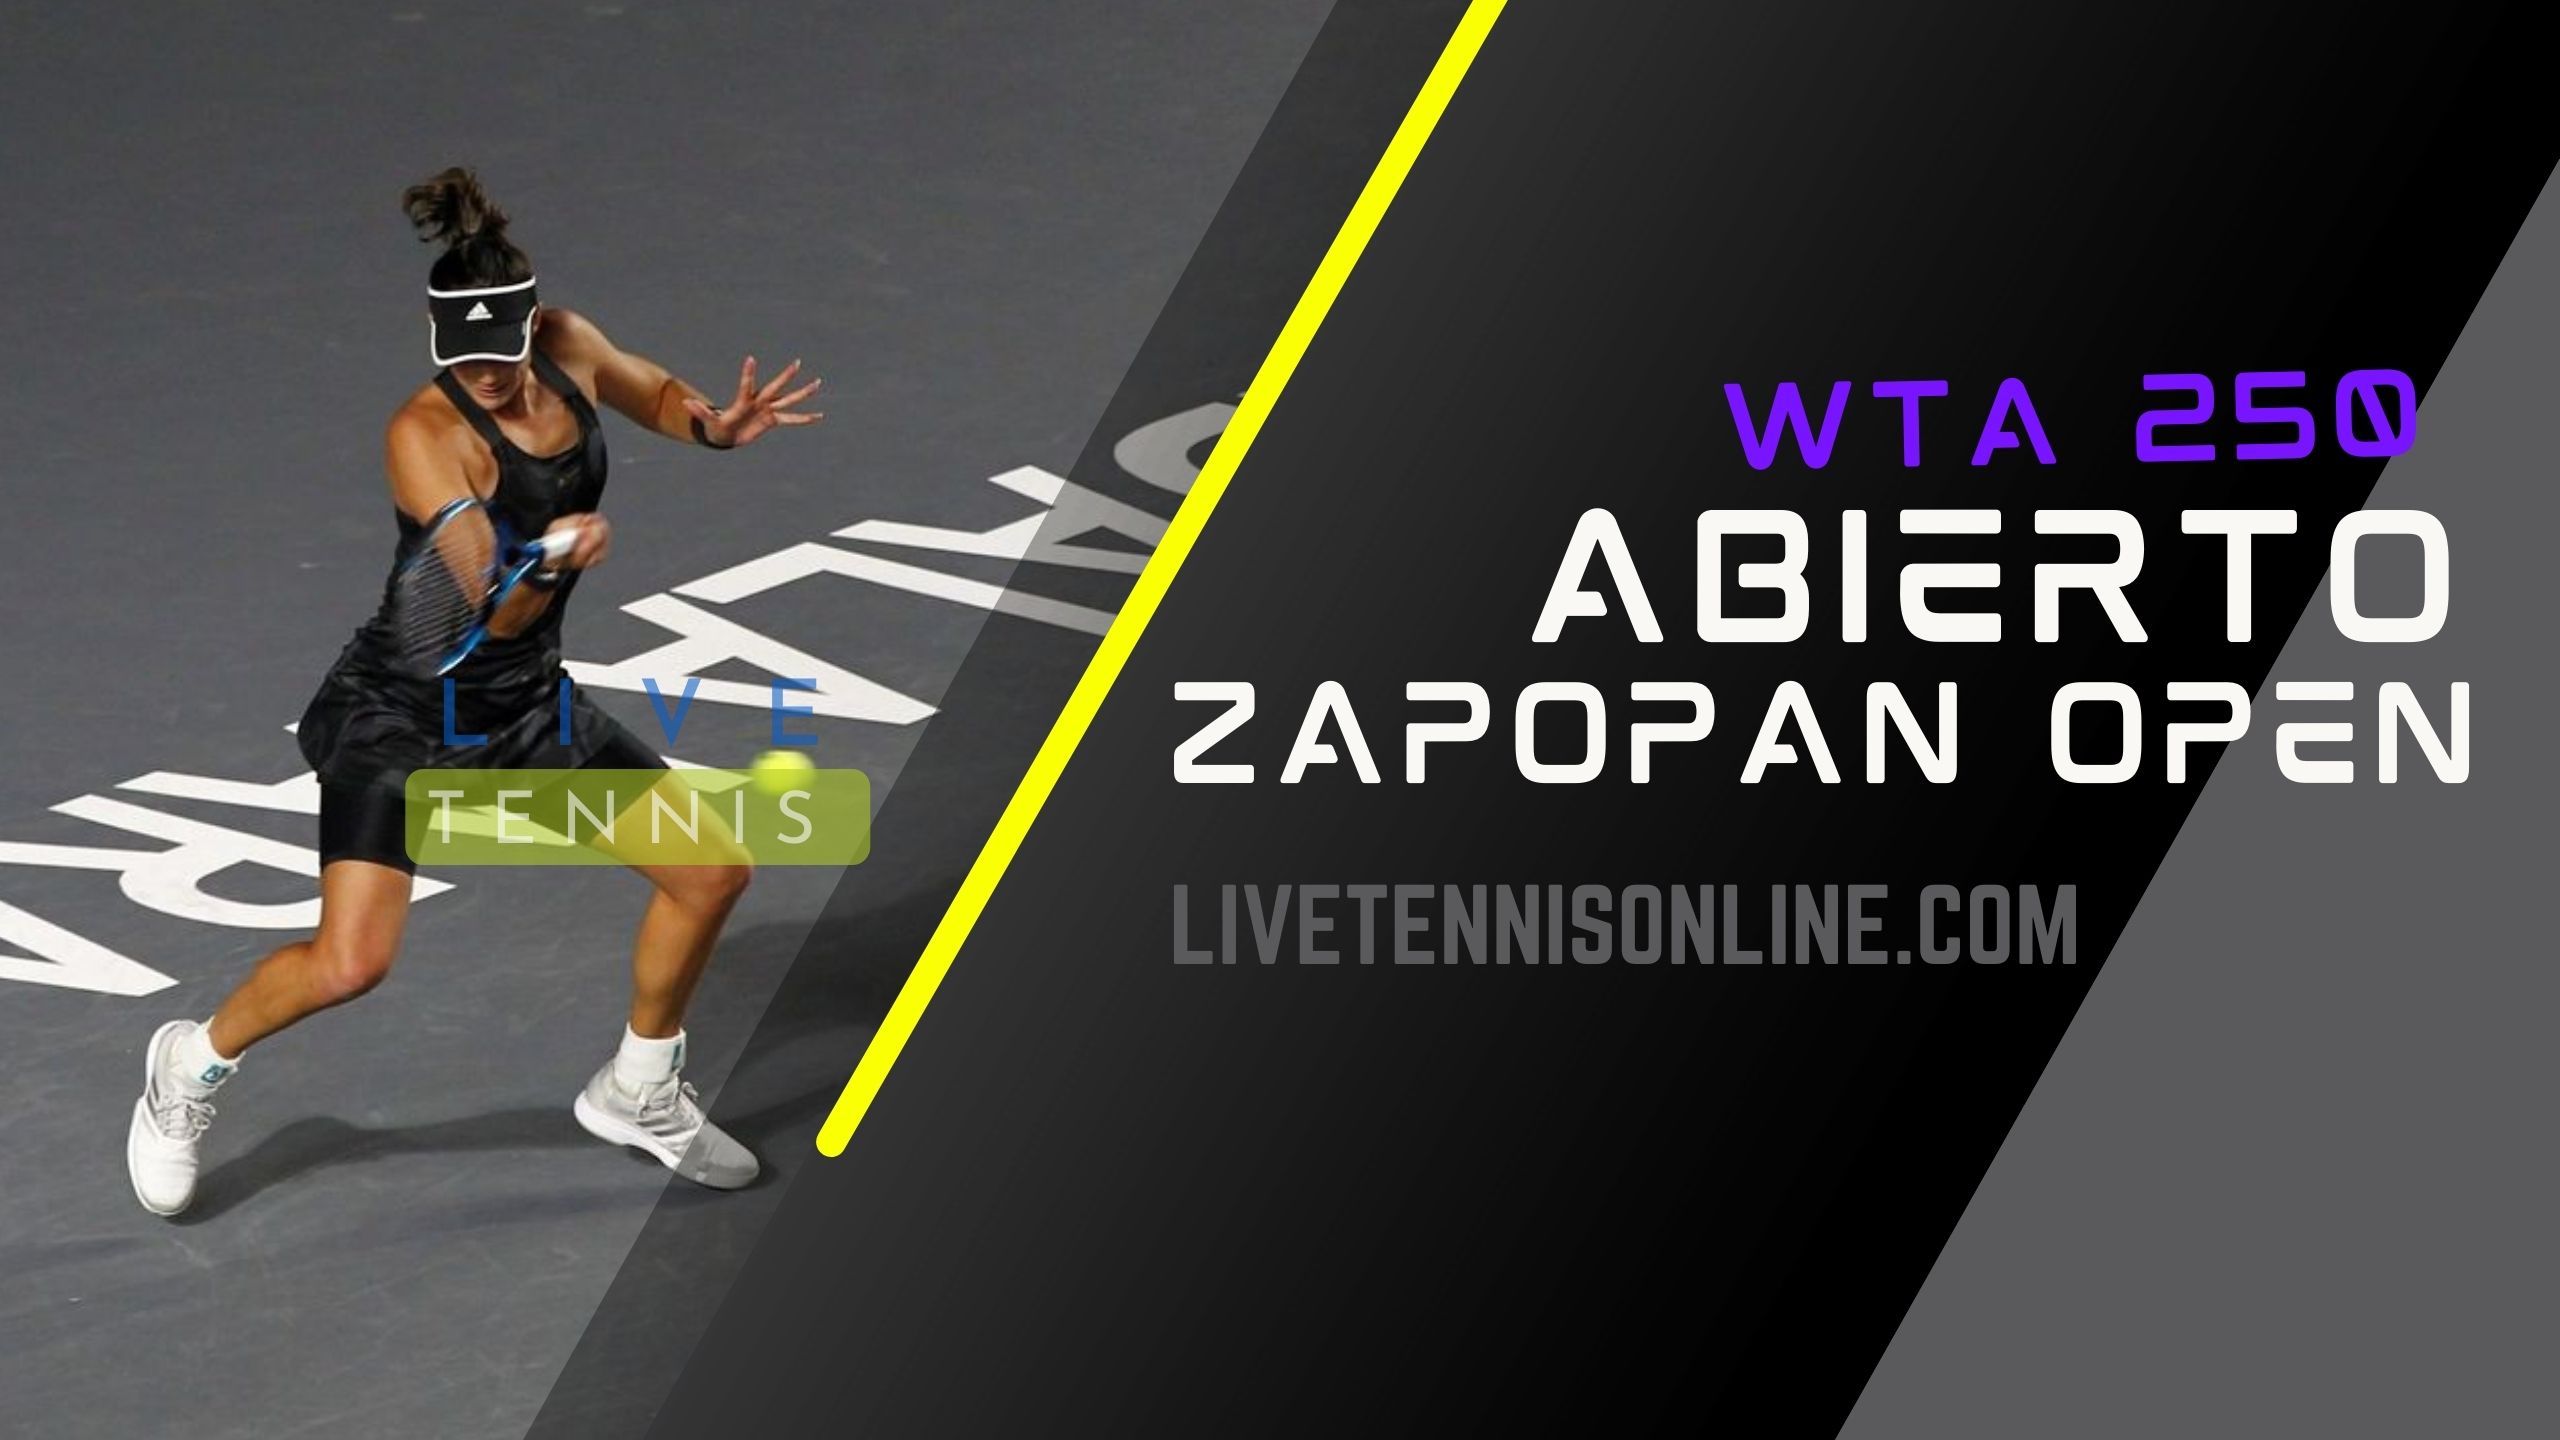 Abierto Zapopan Tennis Live Stream